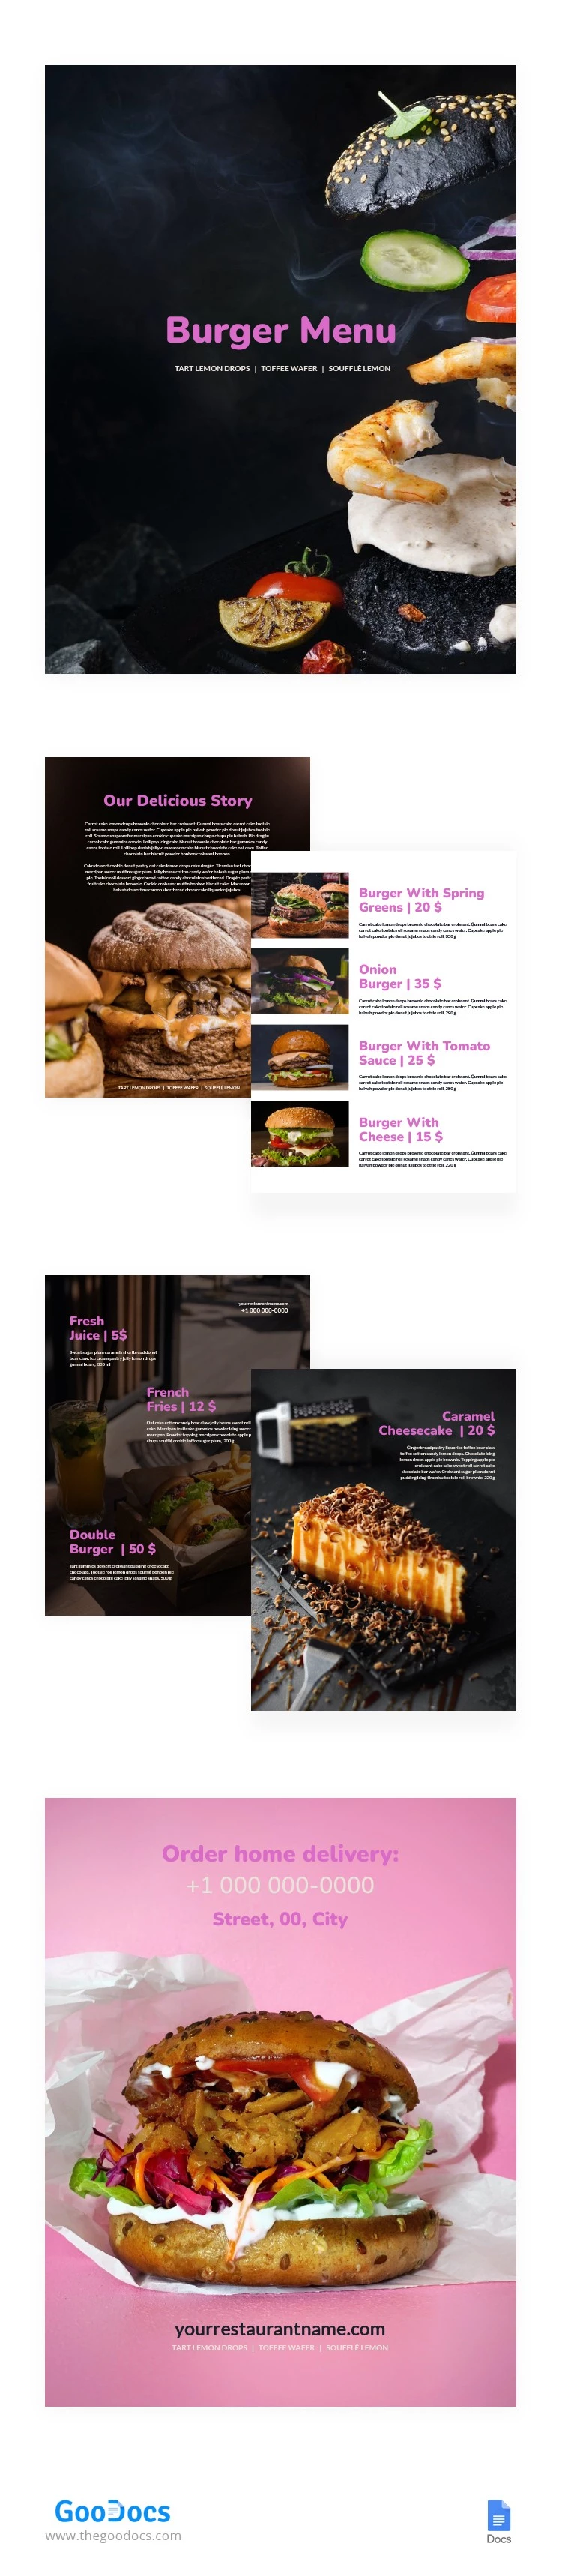 Menu di un semplice ristorante di hamburger - free Google Docs Template - 10063786